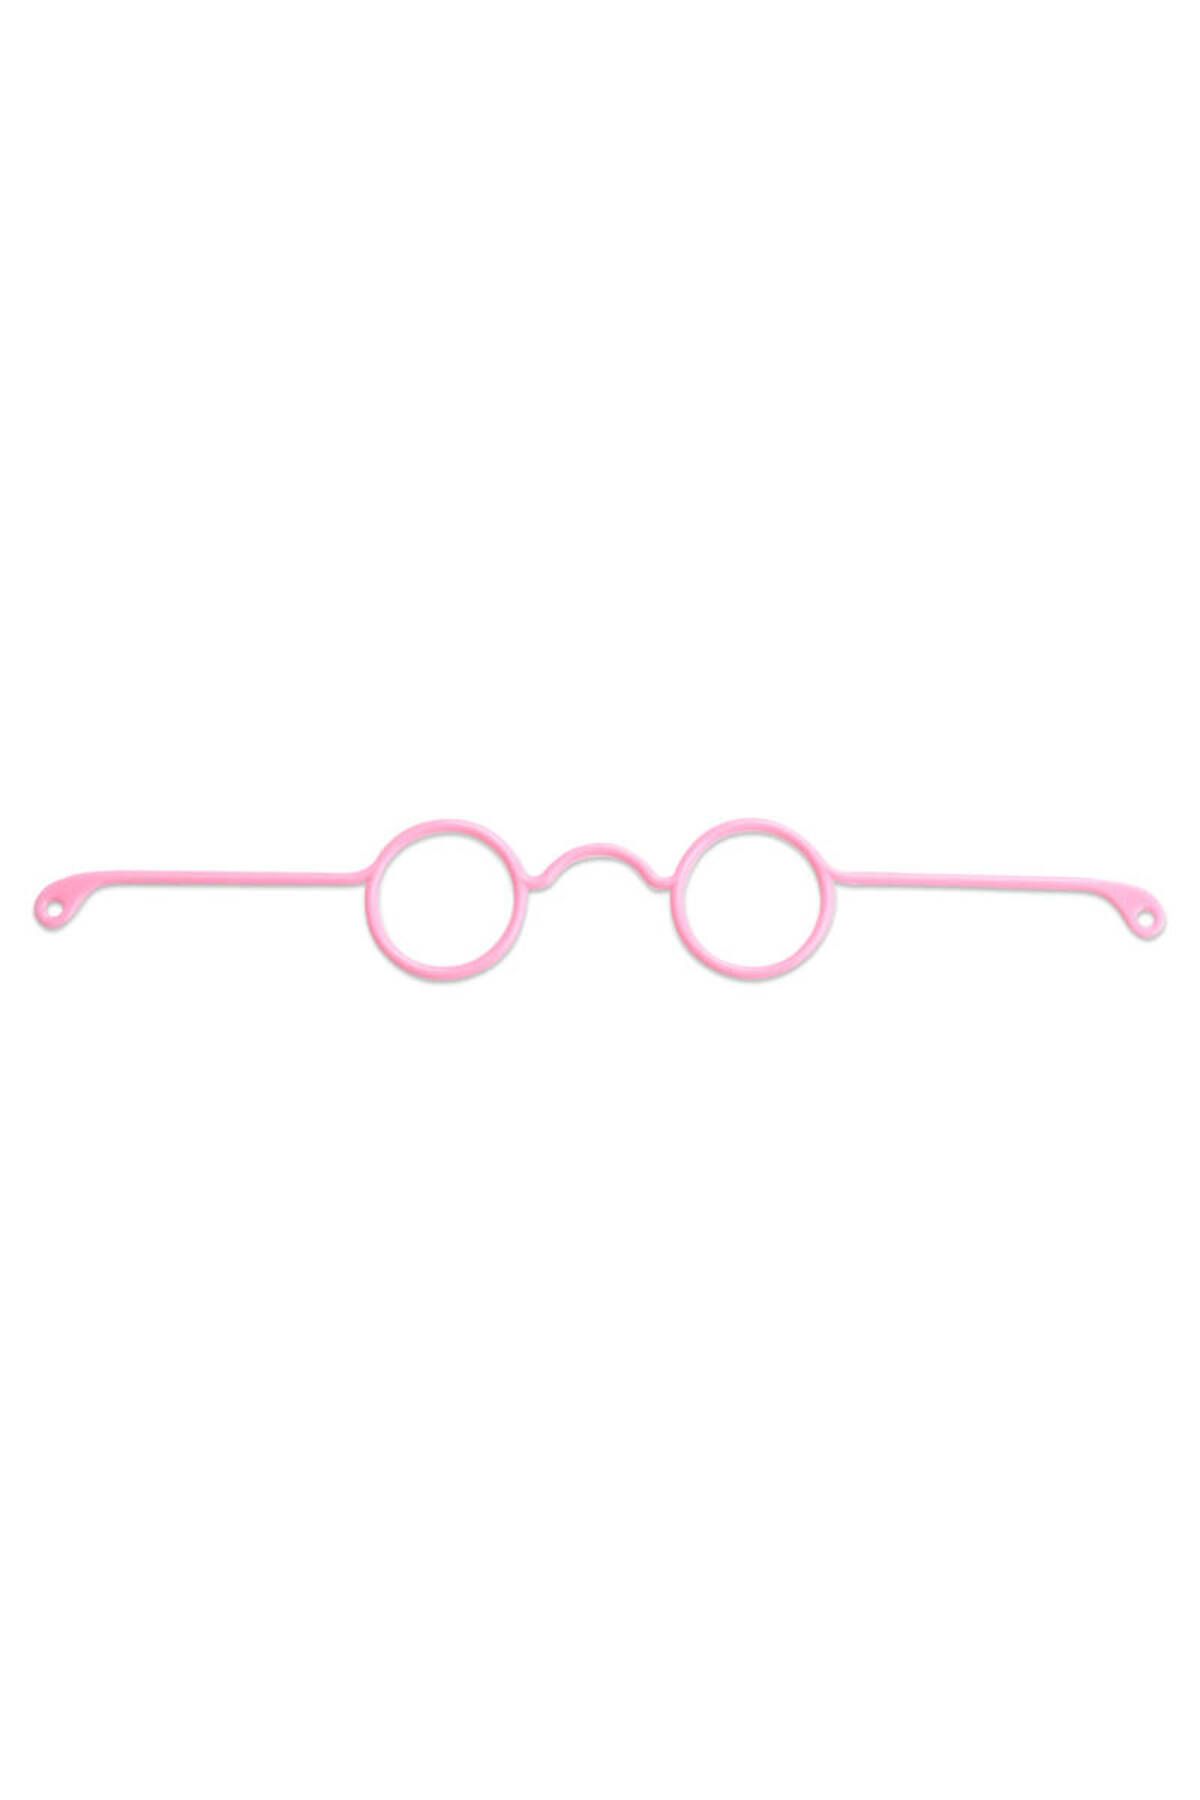 Simisso Amigurumi Gözlük 17 cm | Pembe